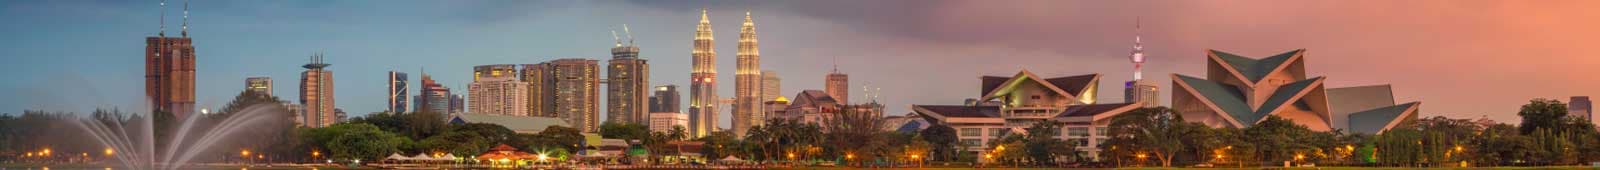 Malaysia City View